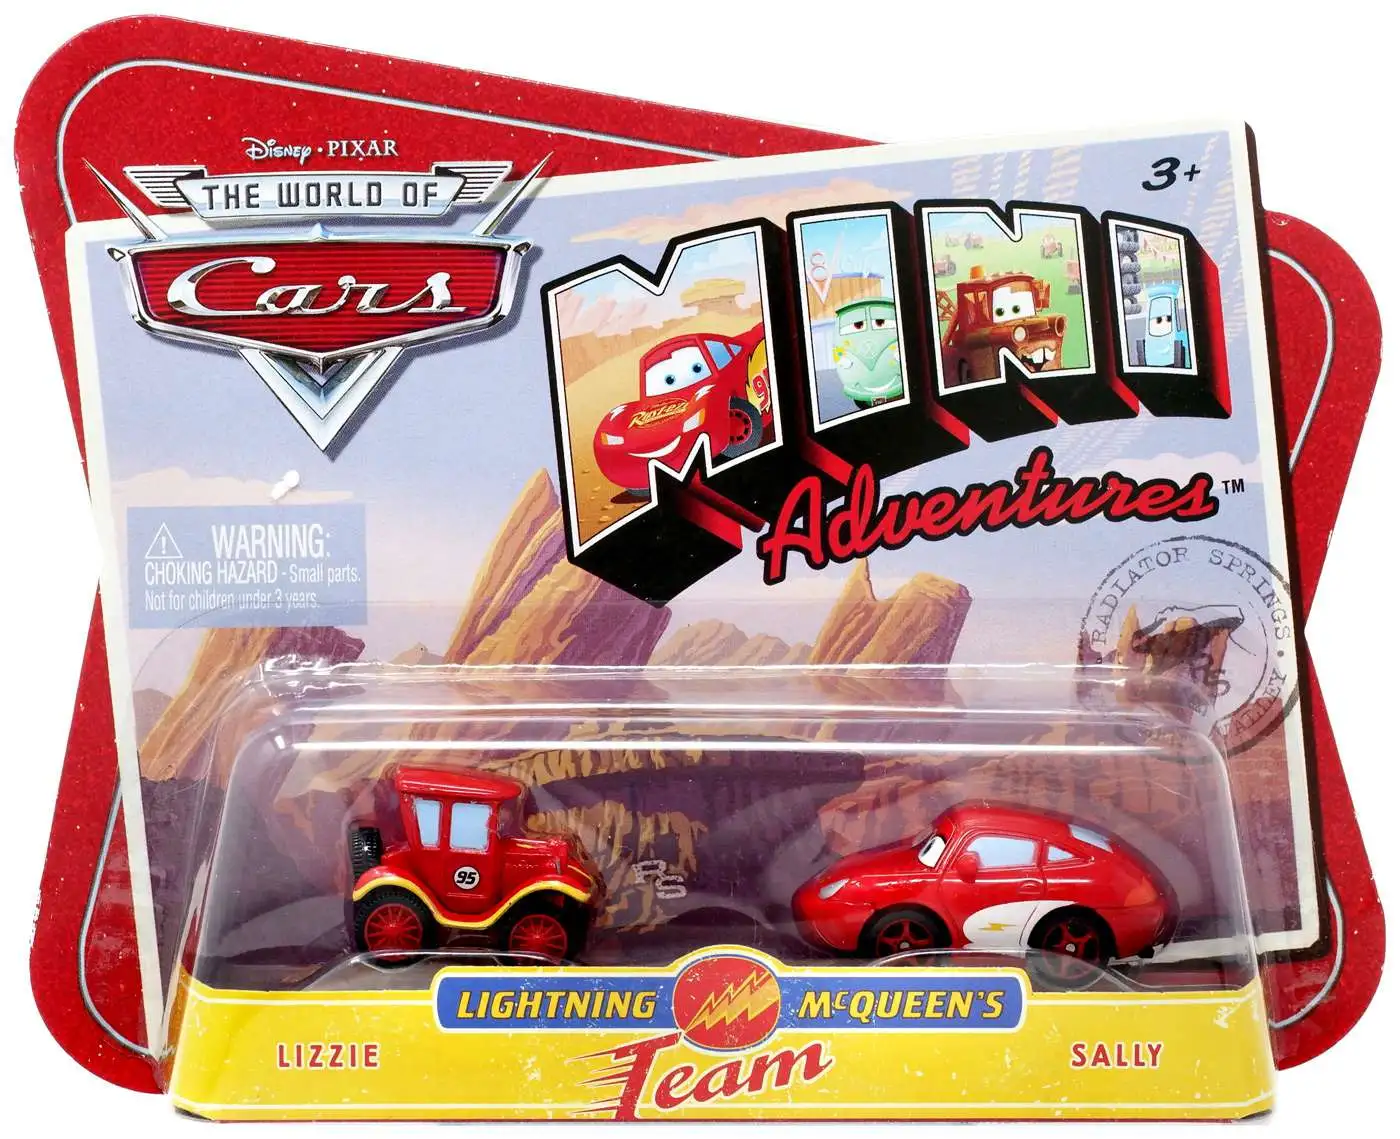 Disney Pixar Cars Cars 3 Mega Figurine Playset Exclusive 155 - ToyWiz